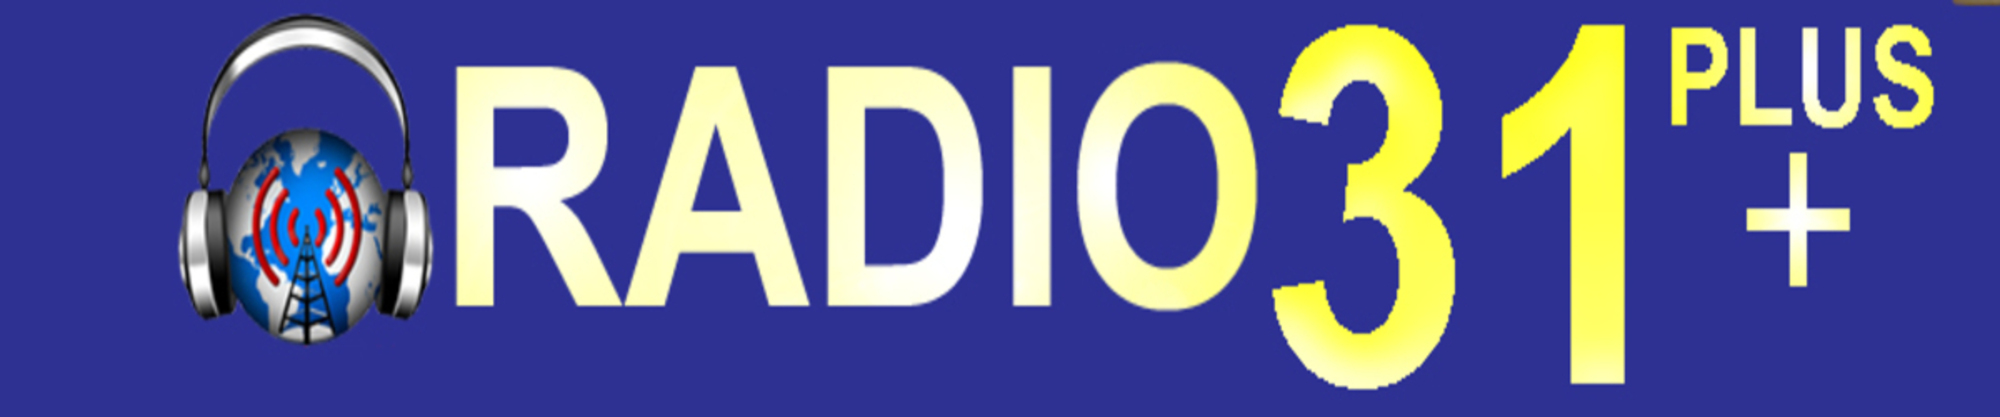 Radio 31 Uzice